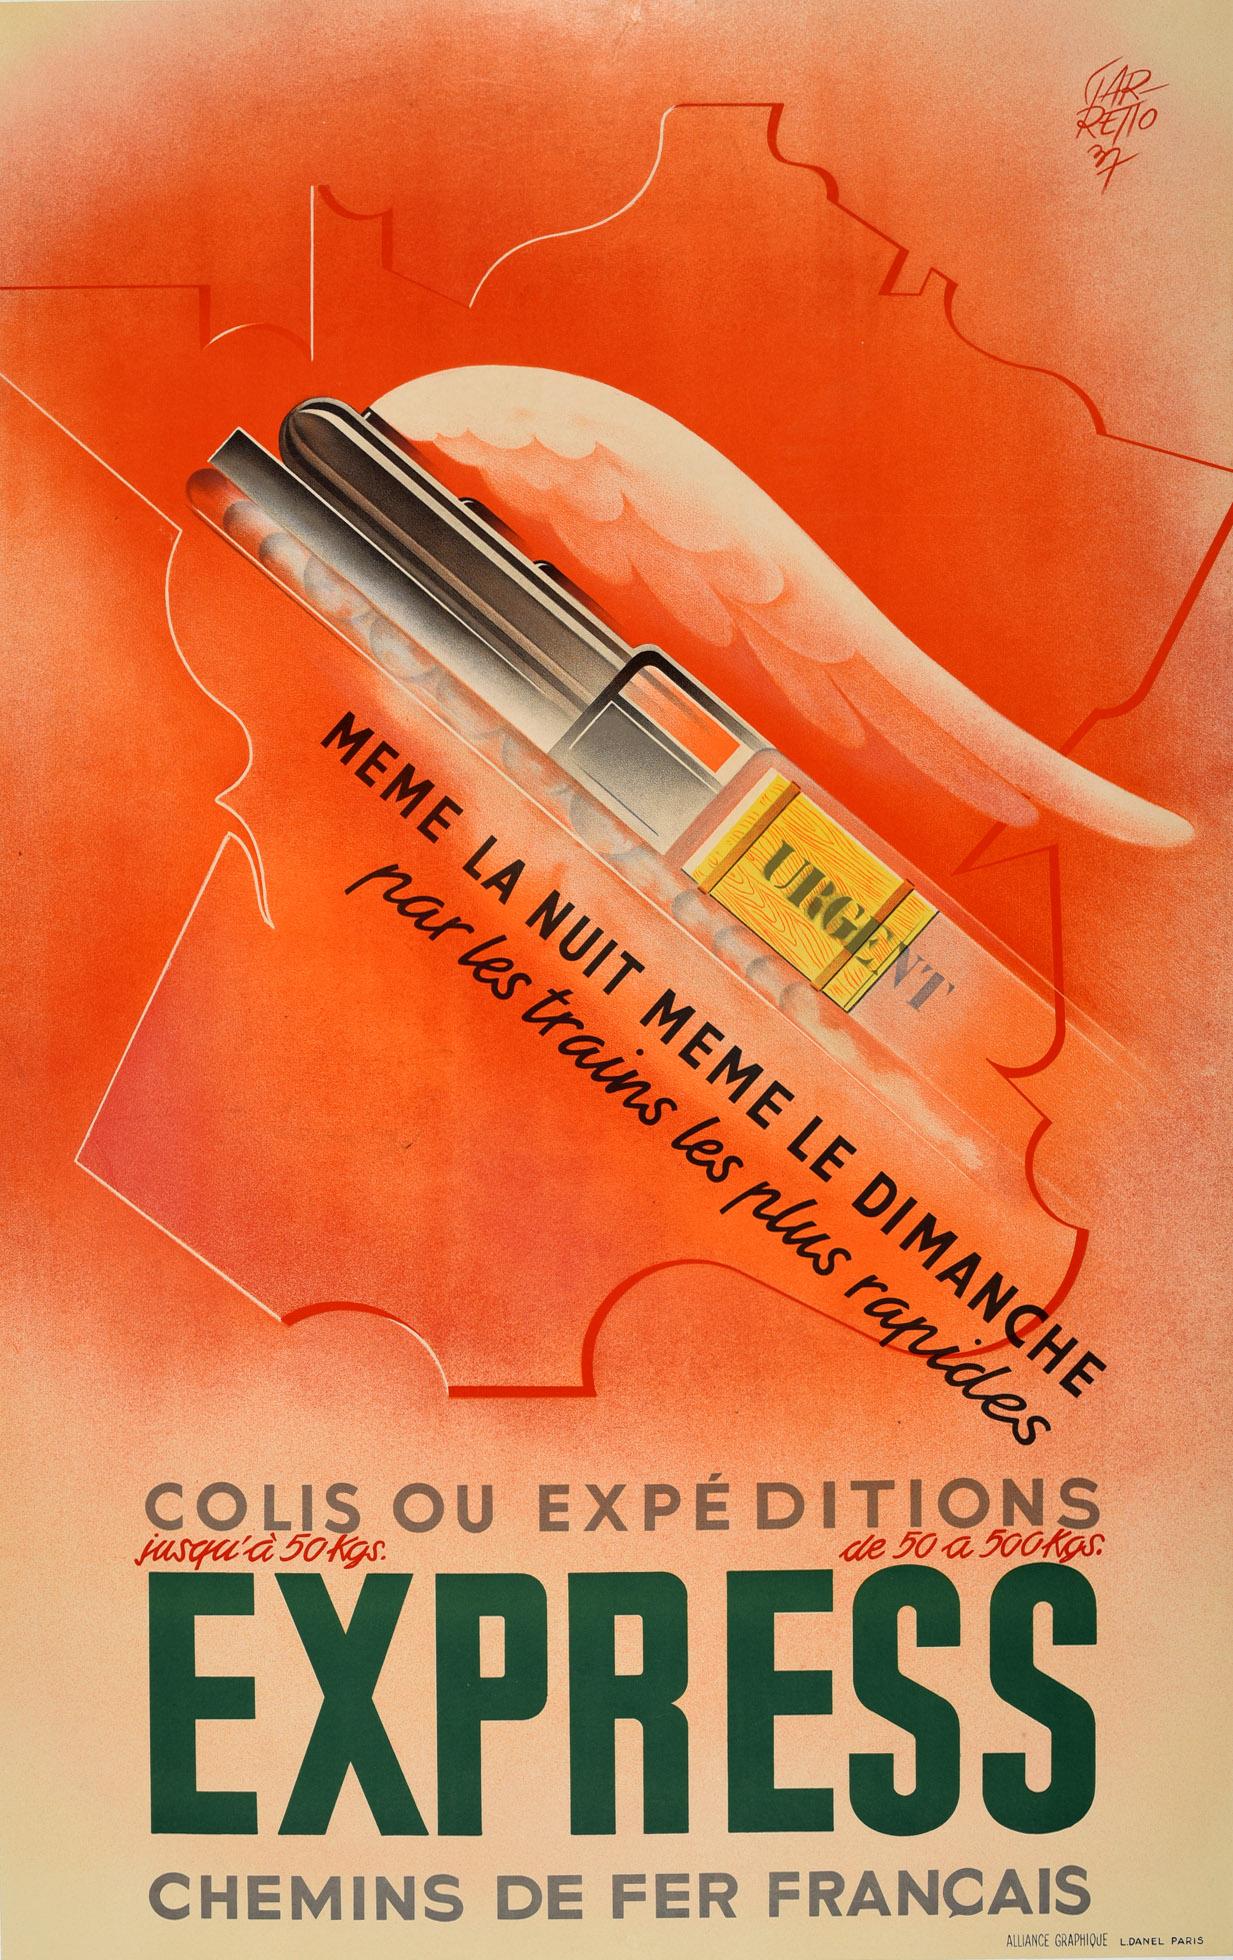 Paolo Garretto Print – Original-Vintage-Poster, Chemins De Fer Railway Express, Zugkarte, Art déco-Design